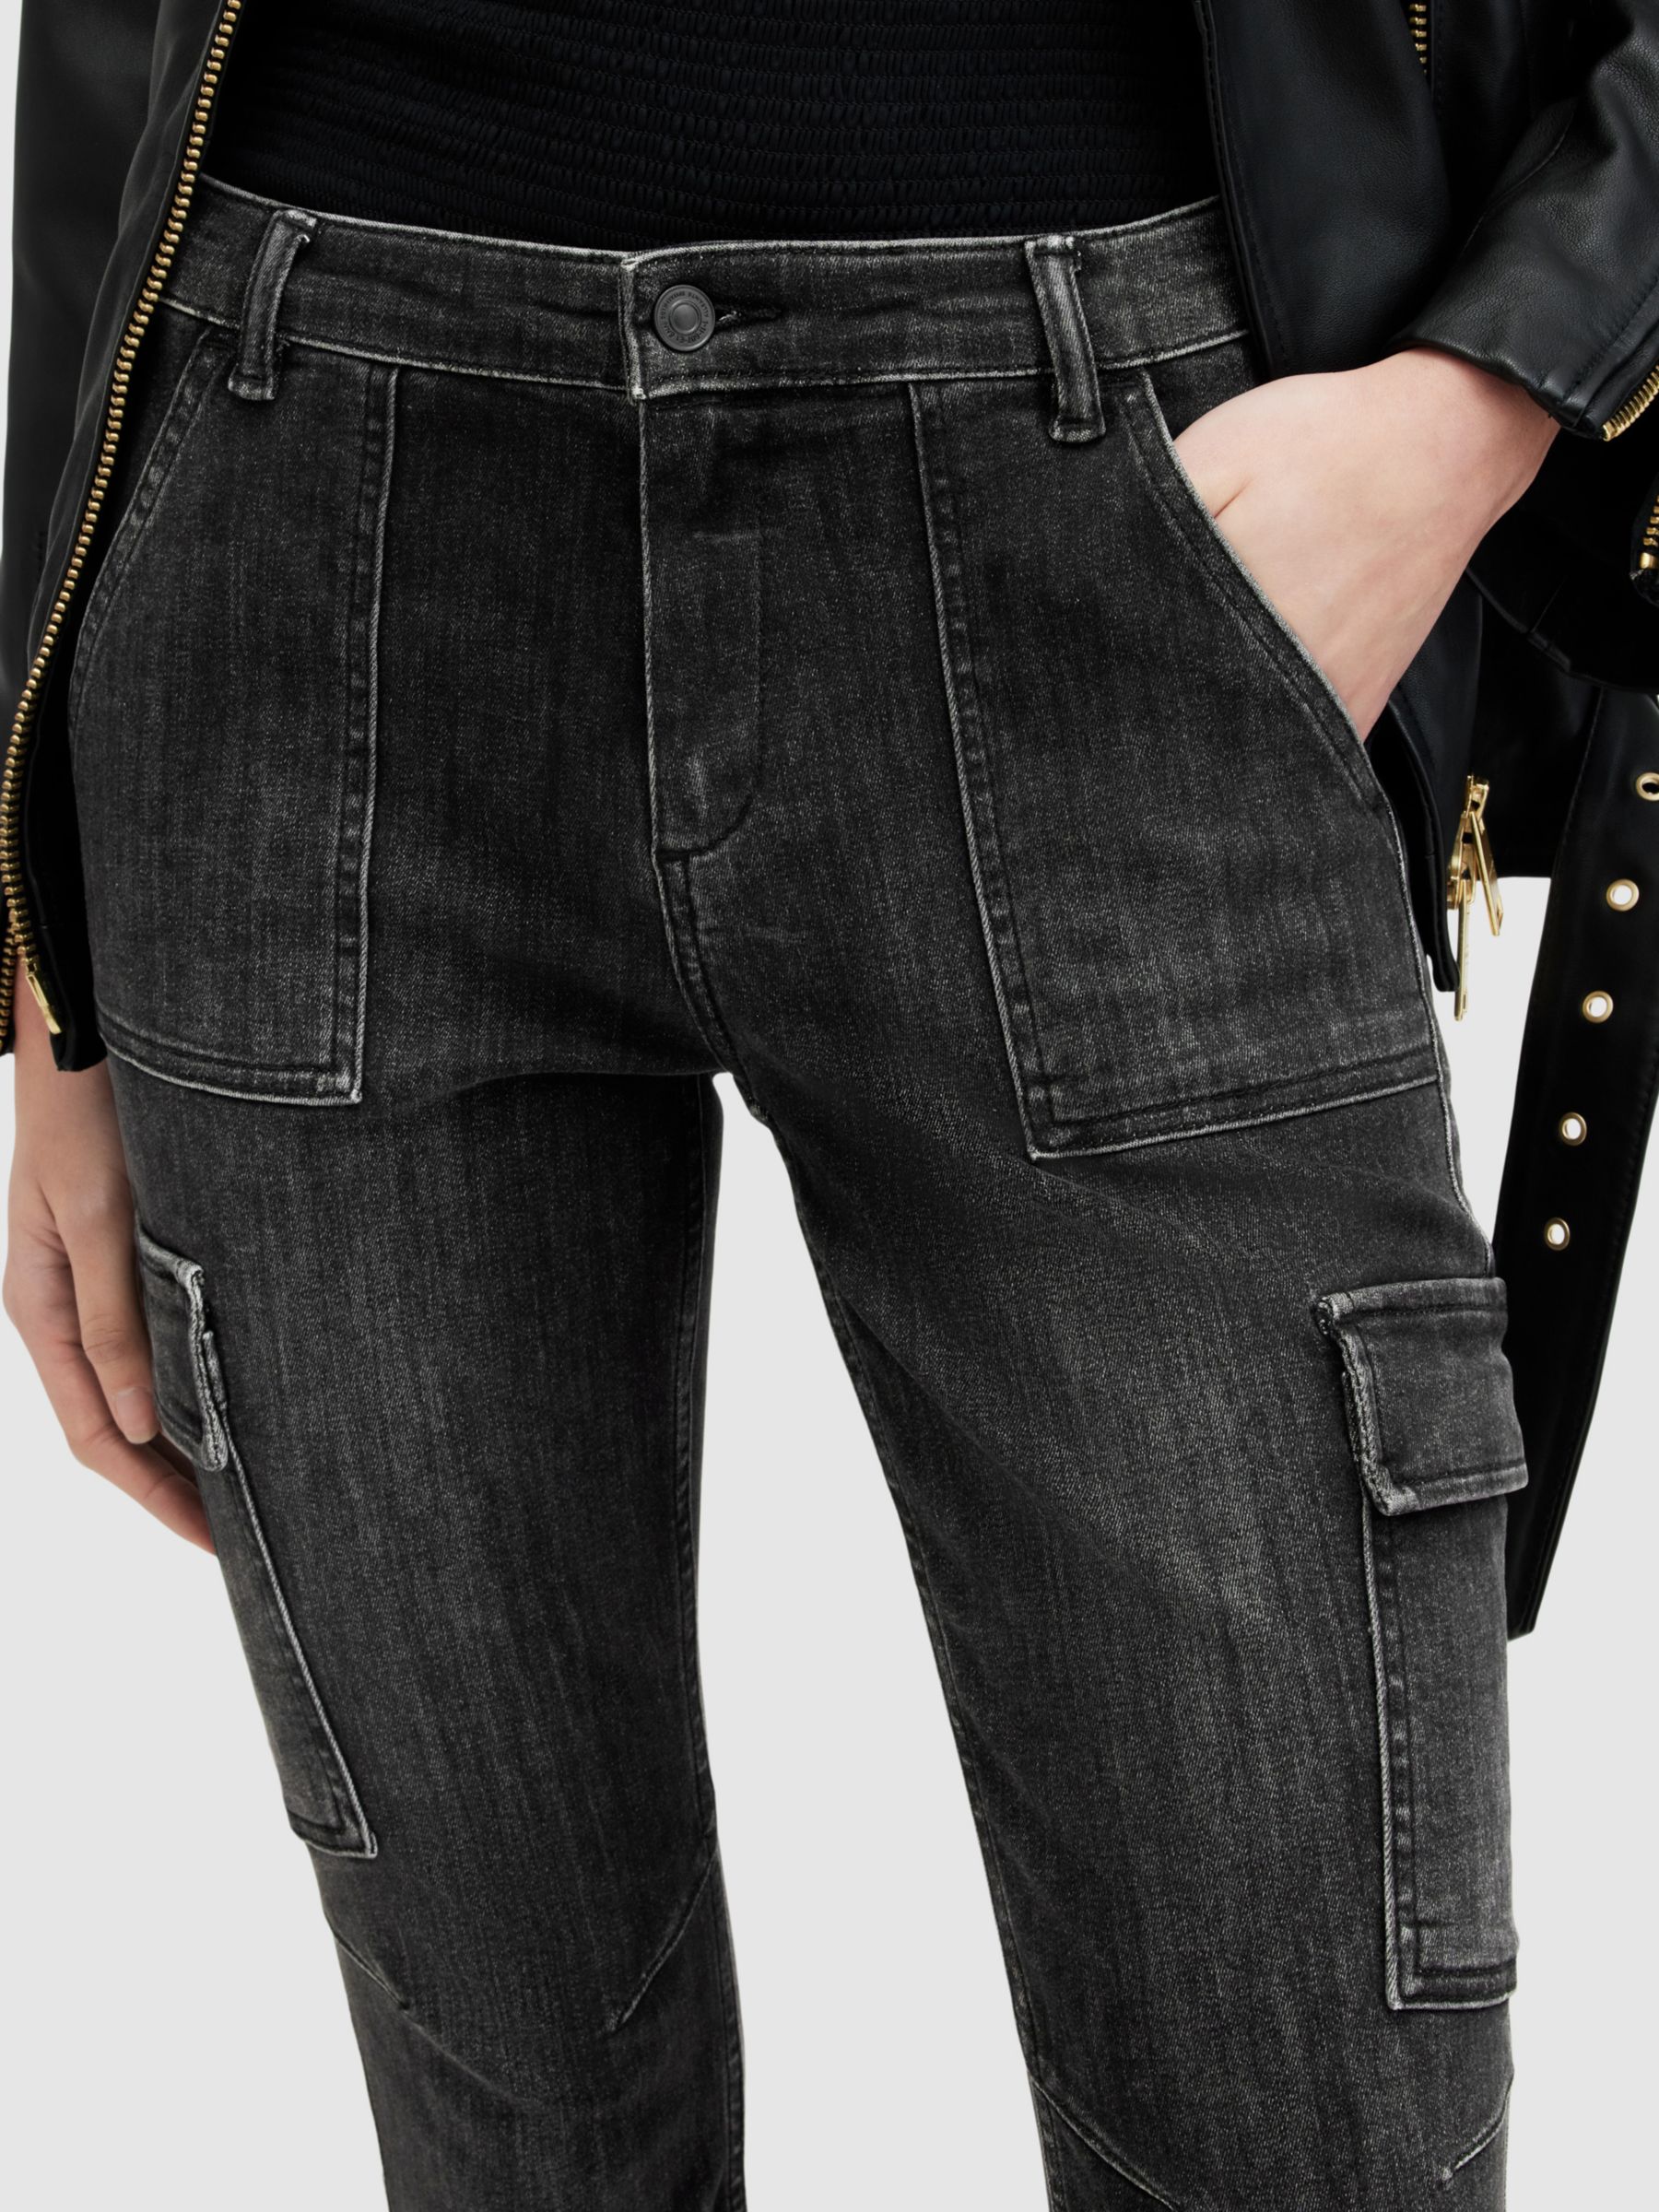 AllSaints Duran Cargo Jeans, Washed Black at John Lewis & Partners